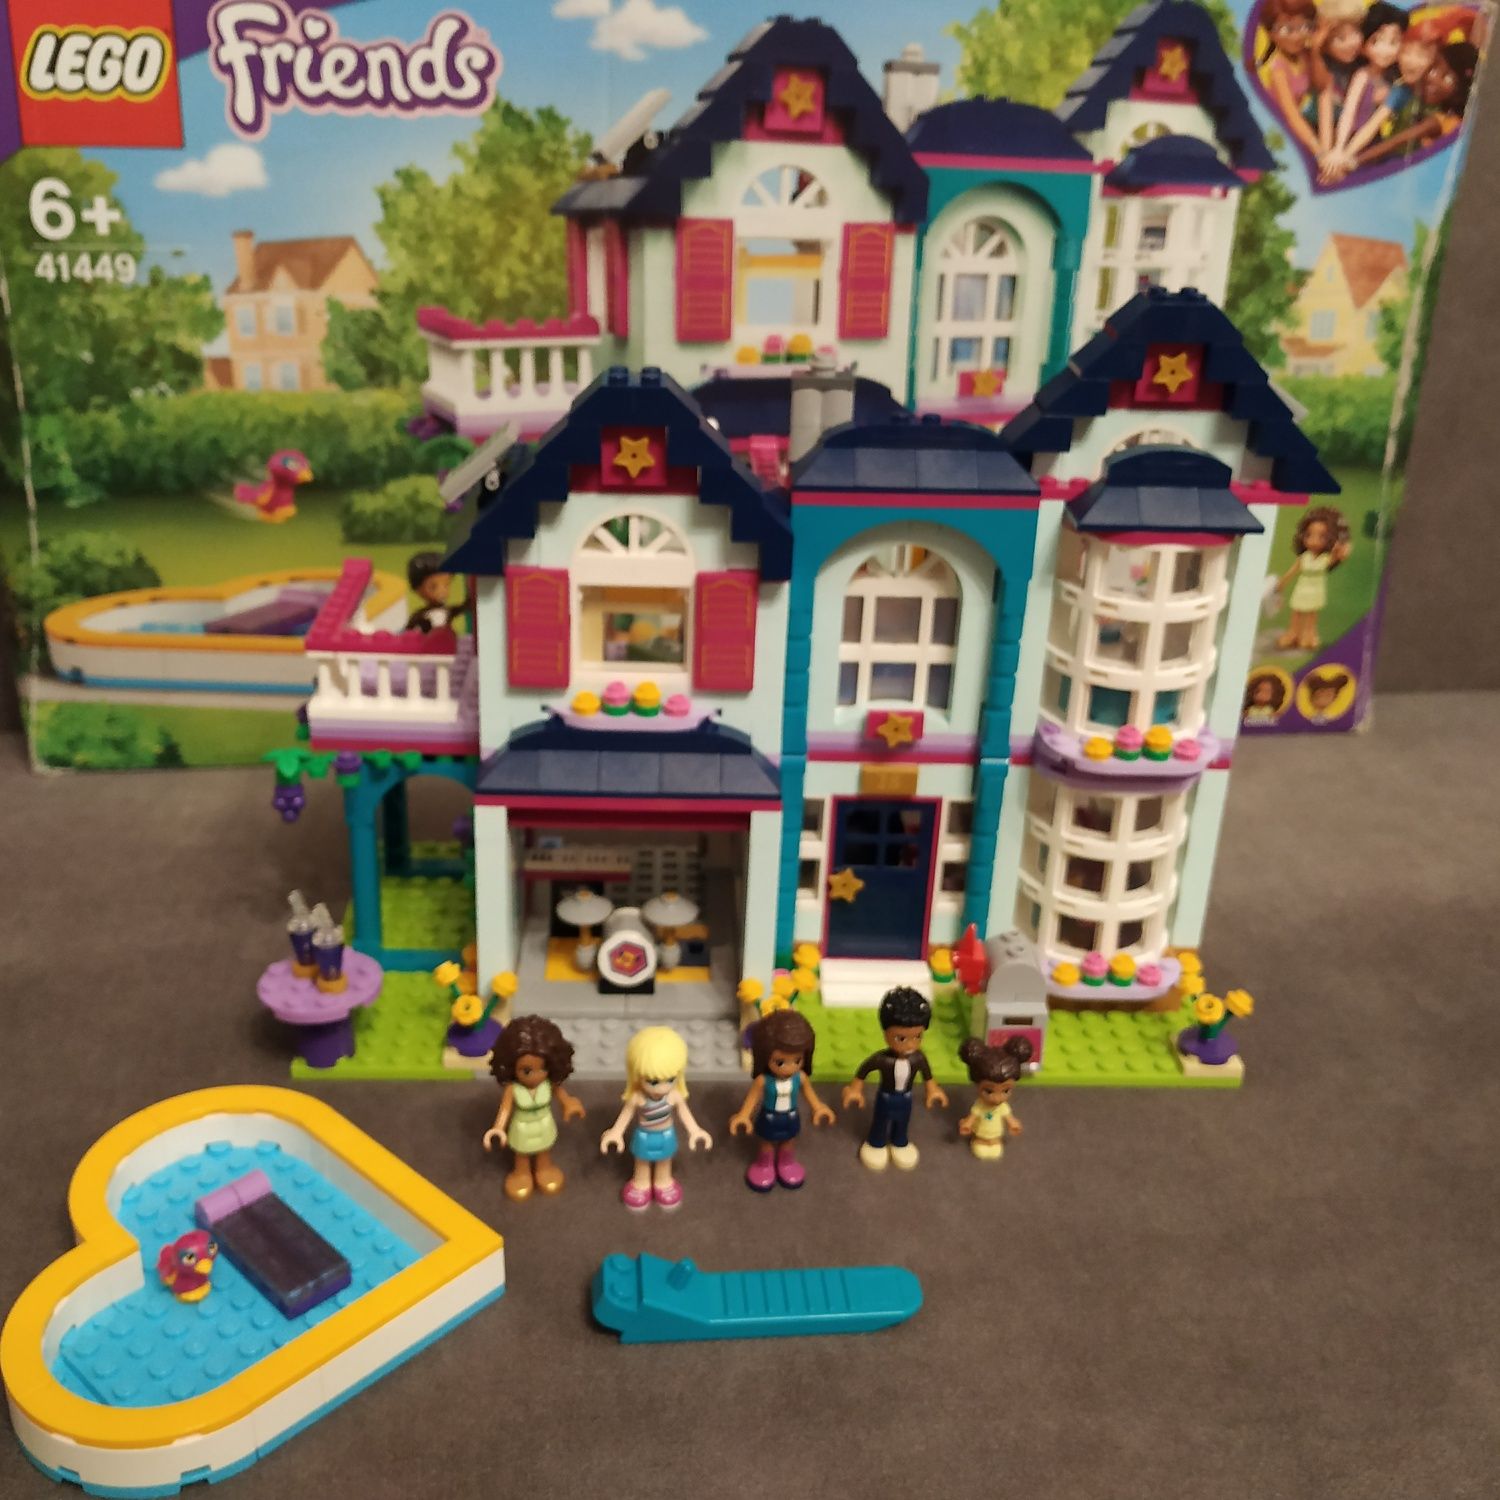 Lego Friends 41449